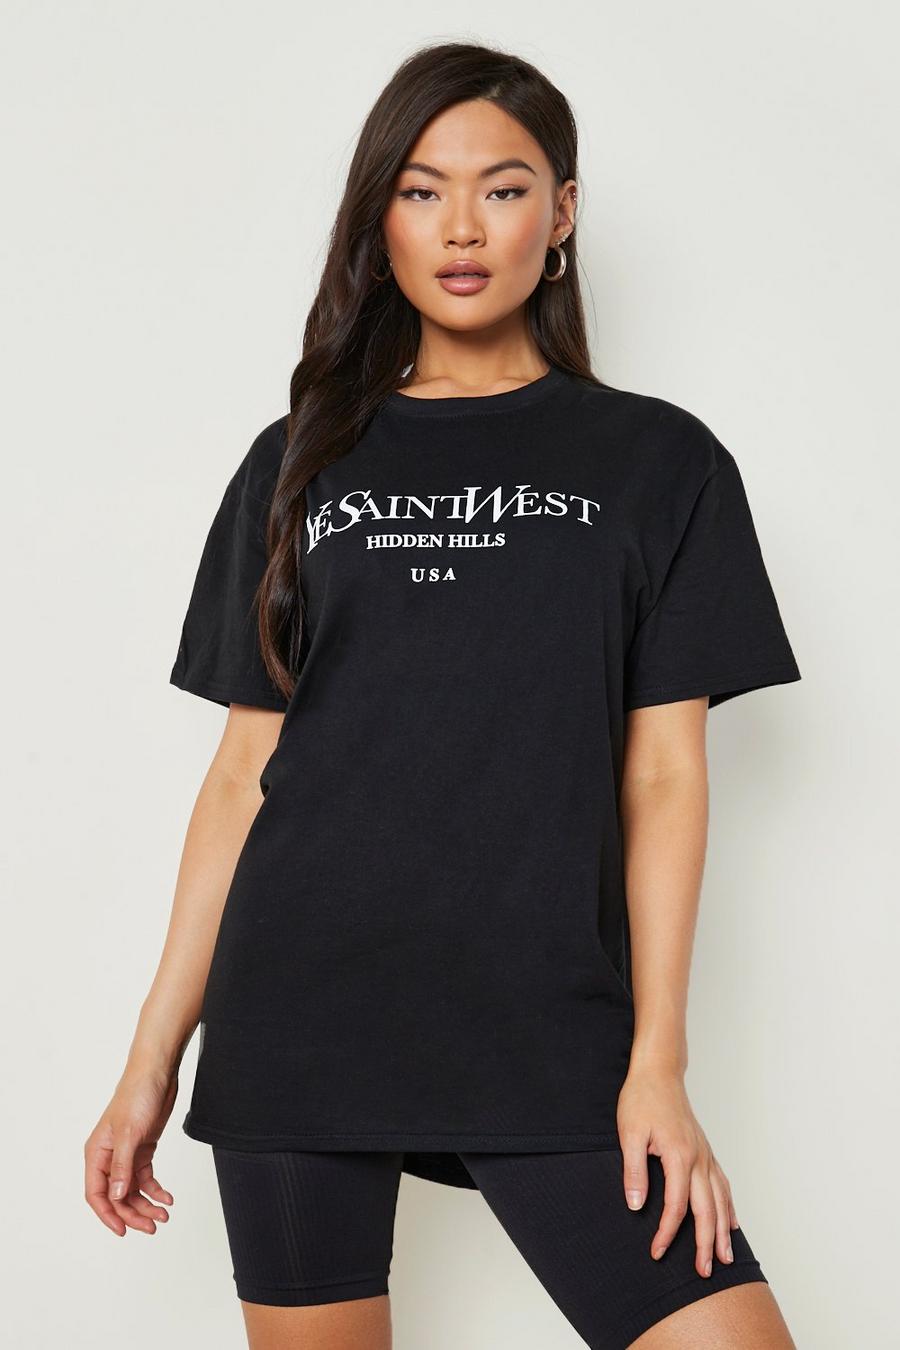 Camiseta oversize de Ye Saint West, Black nero